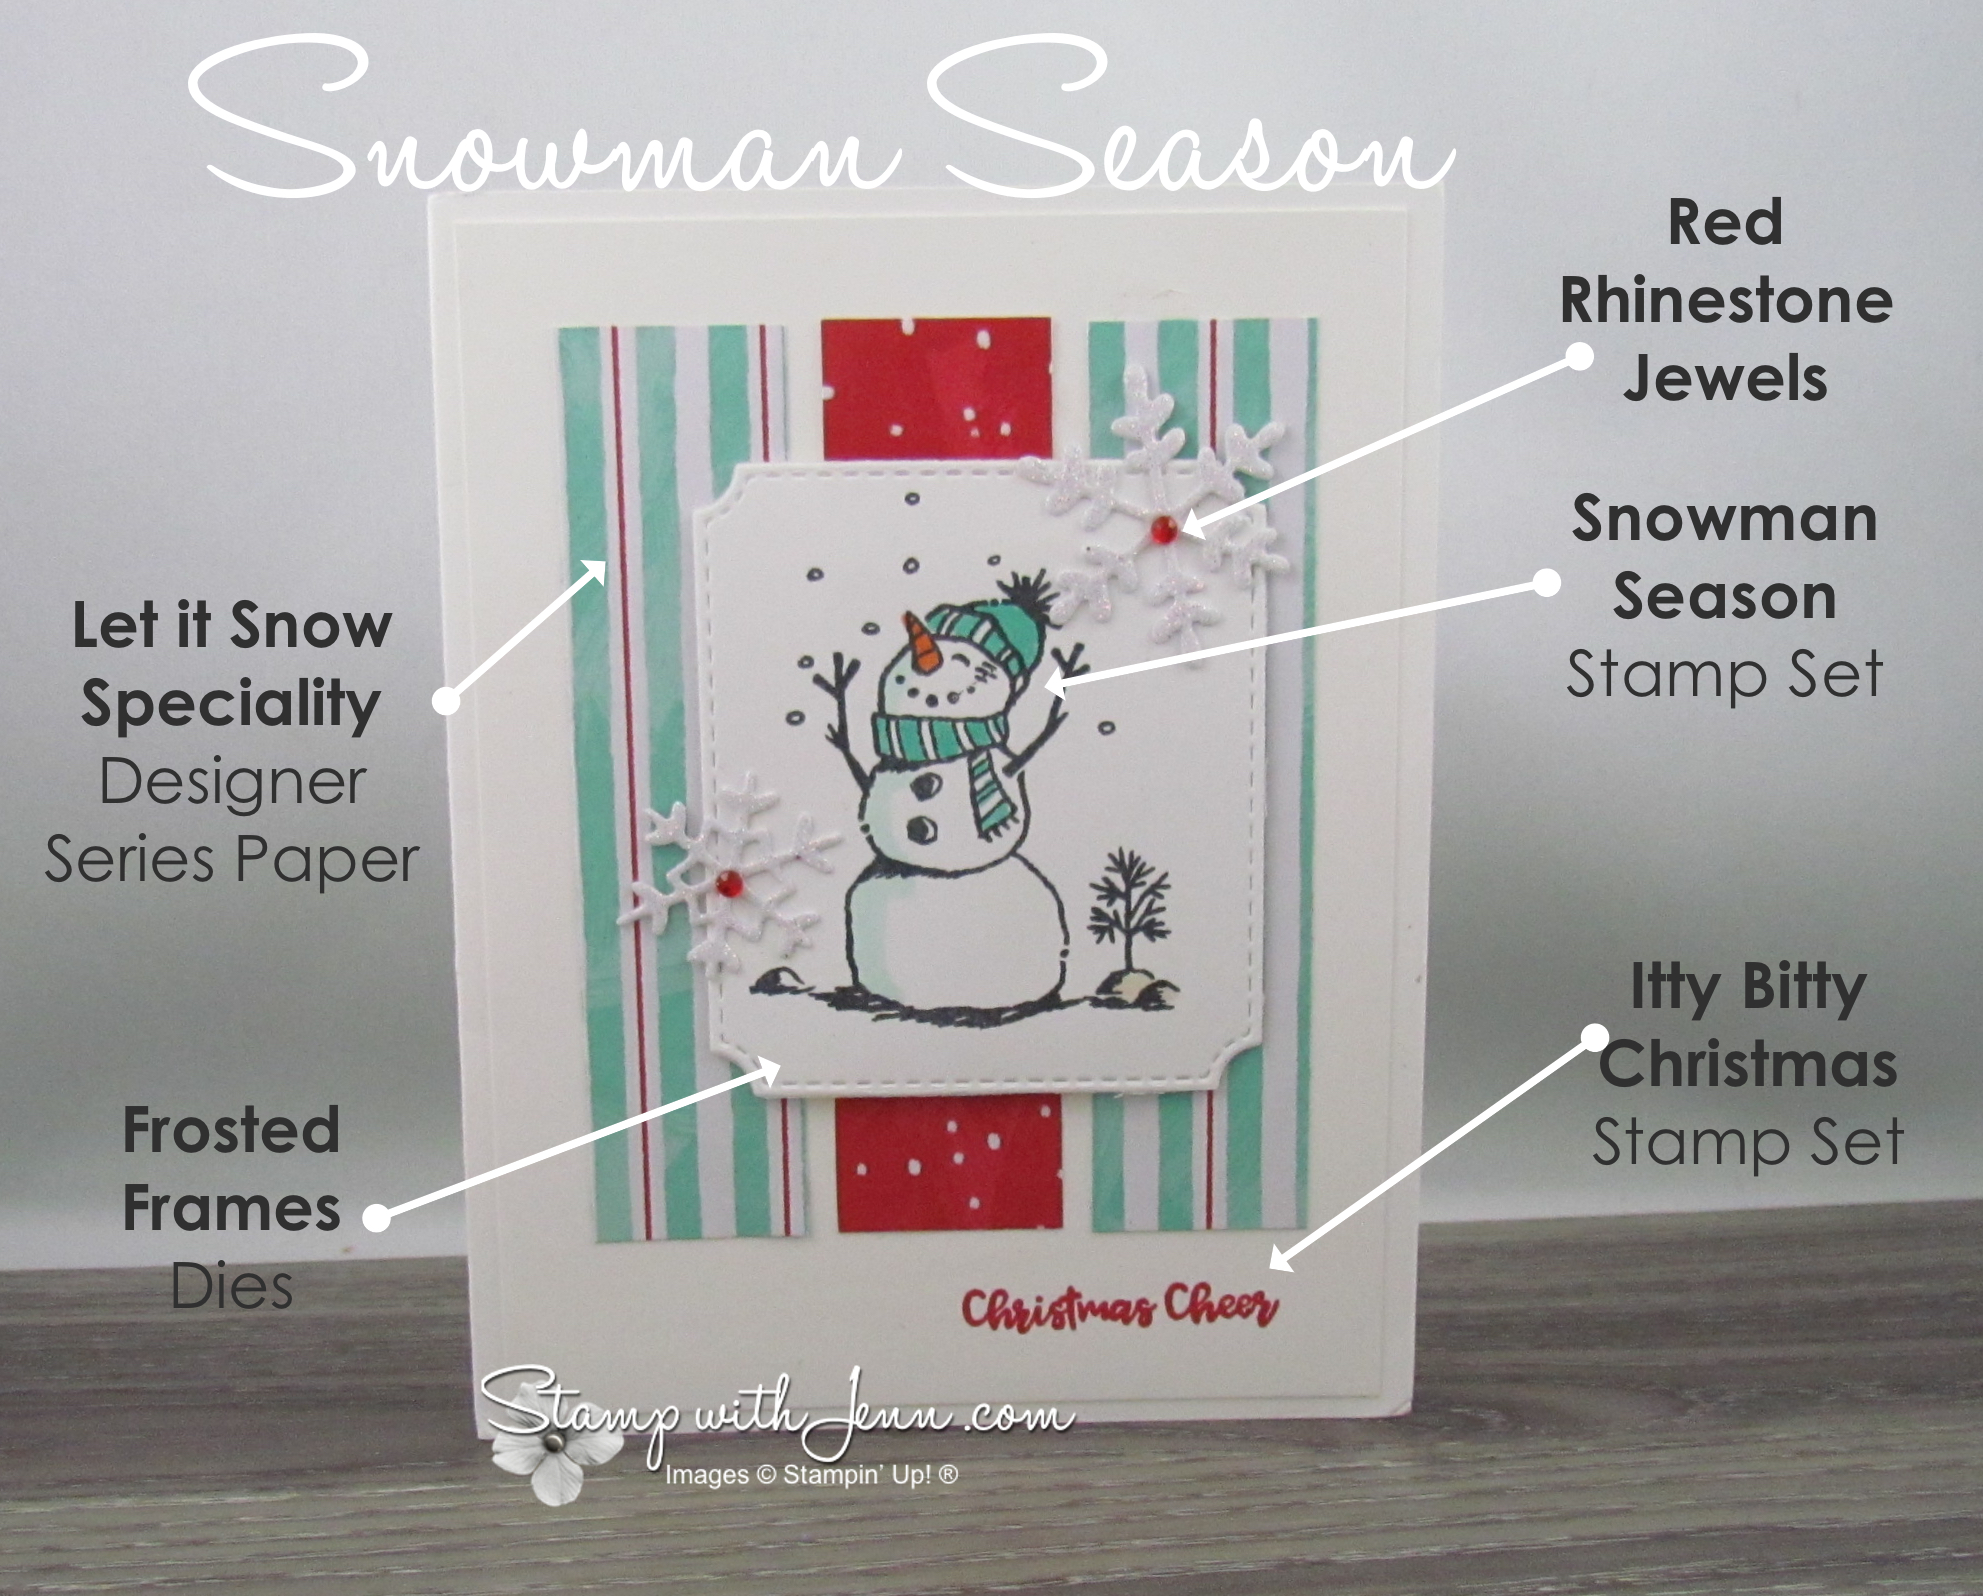 snowman season card 2019 Stampin' Up!